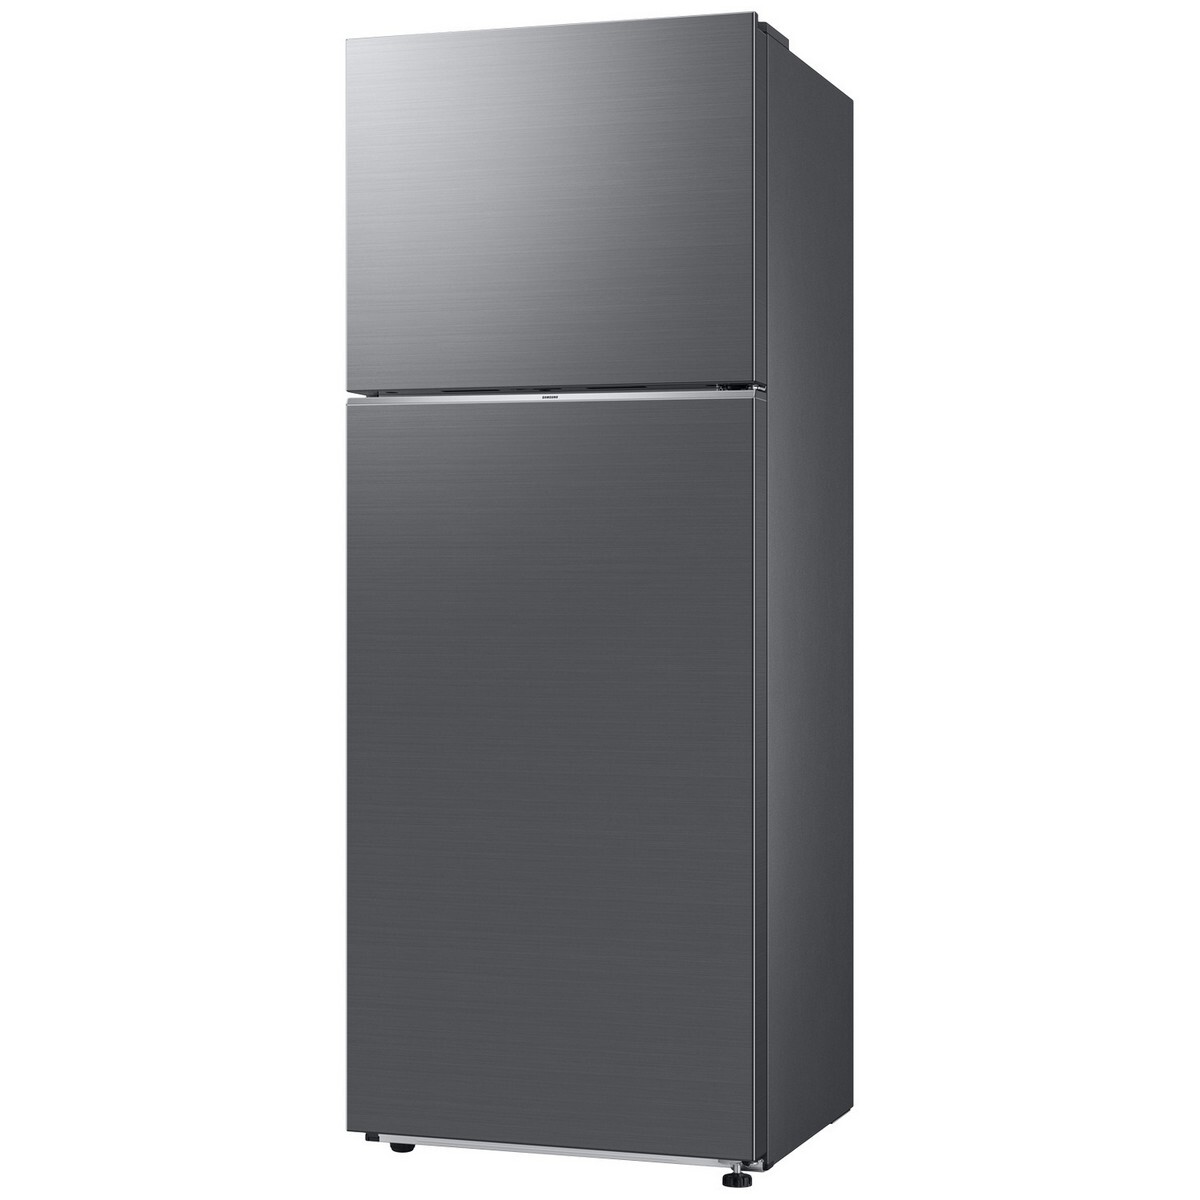 Samsung Optimal Fresh Plus Double Door Refrigerator RT51CG662AS9TL 465L